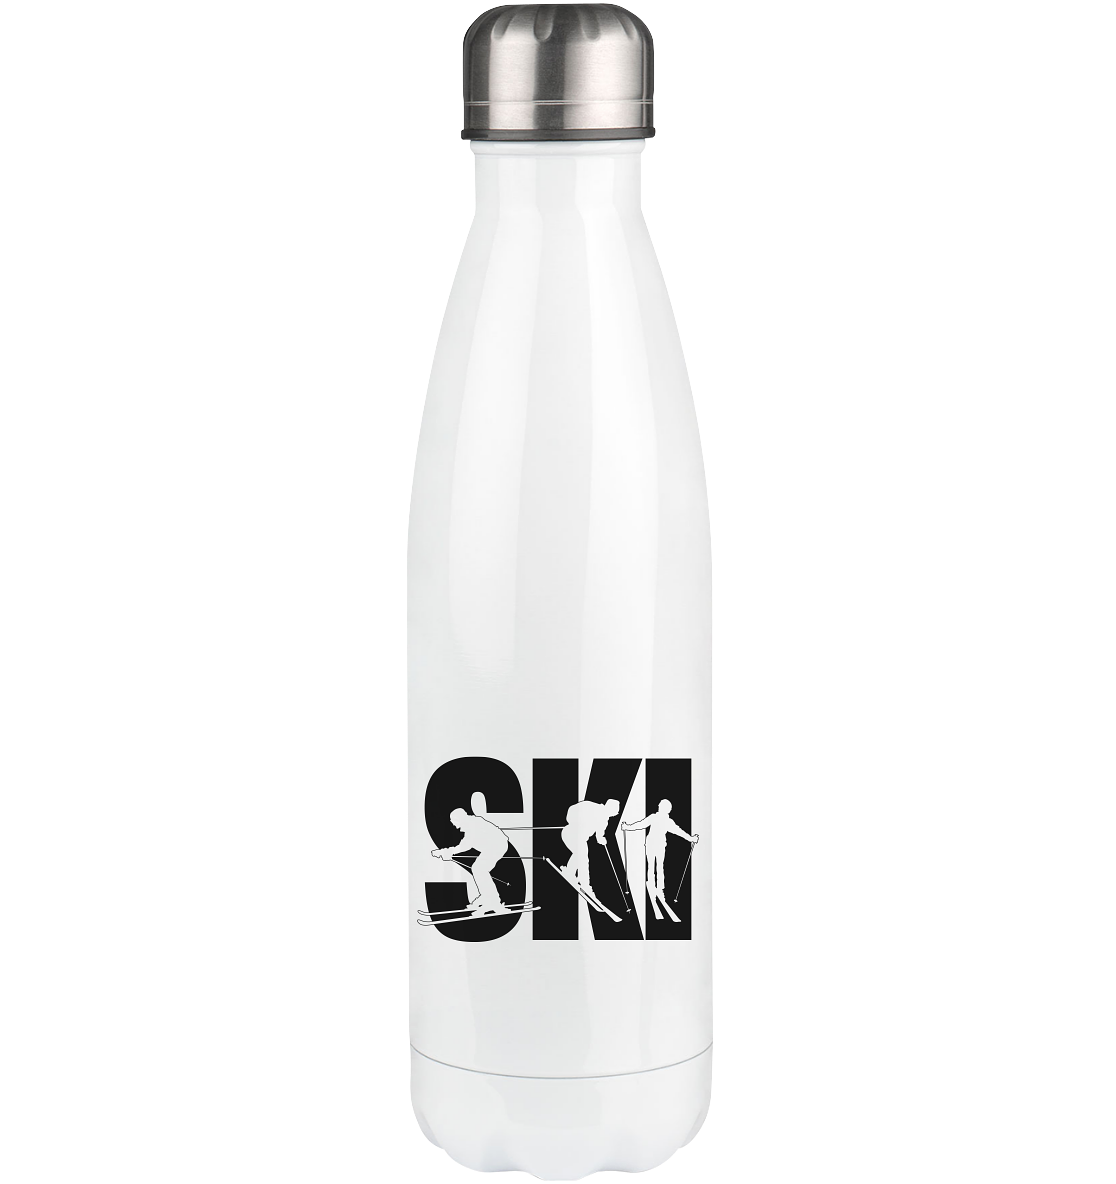 SKI - (S.K) - Edelstahl Thermosflasche klettern 500ml